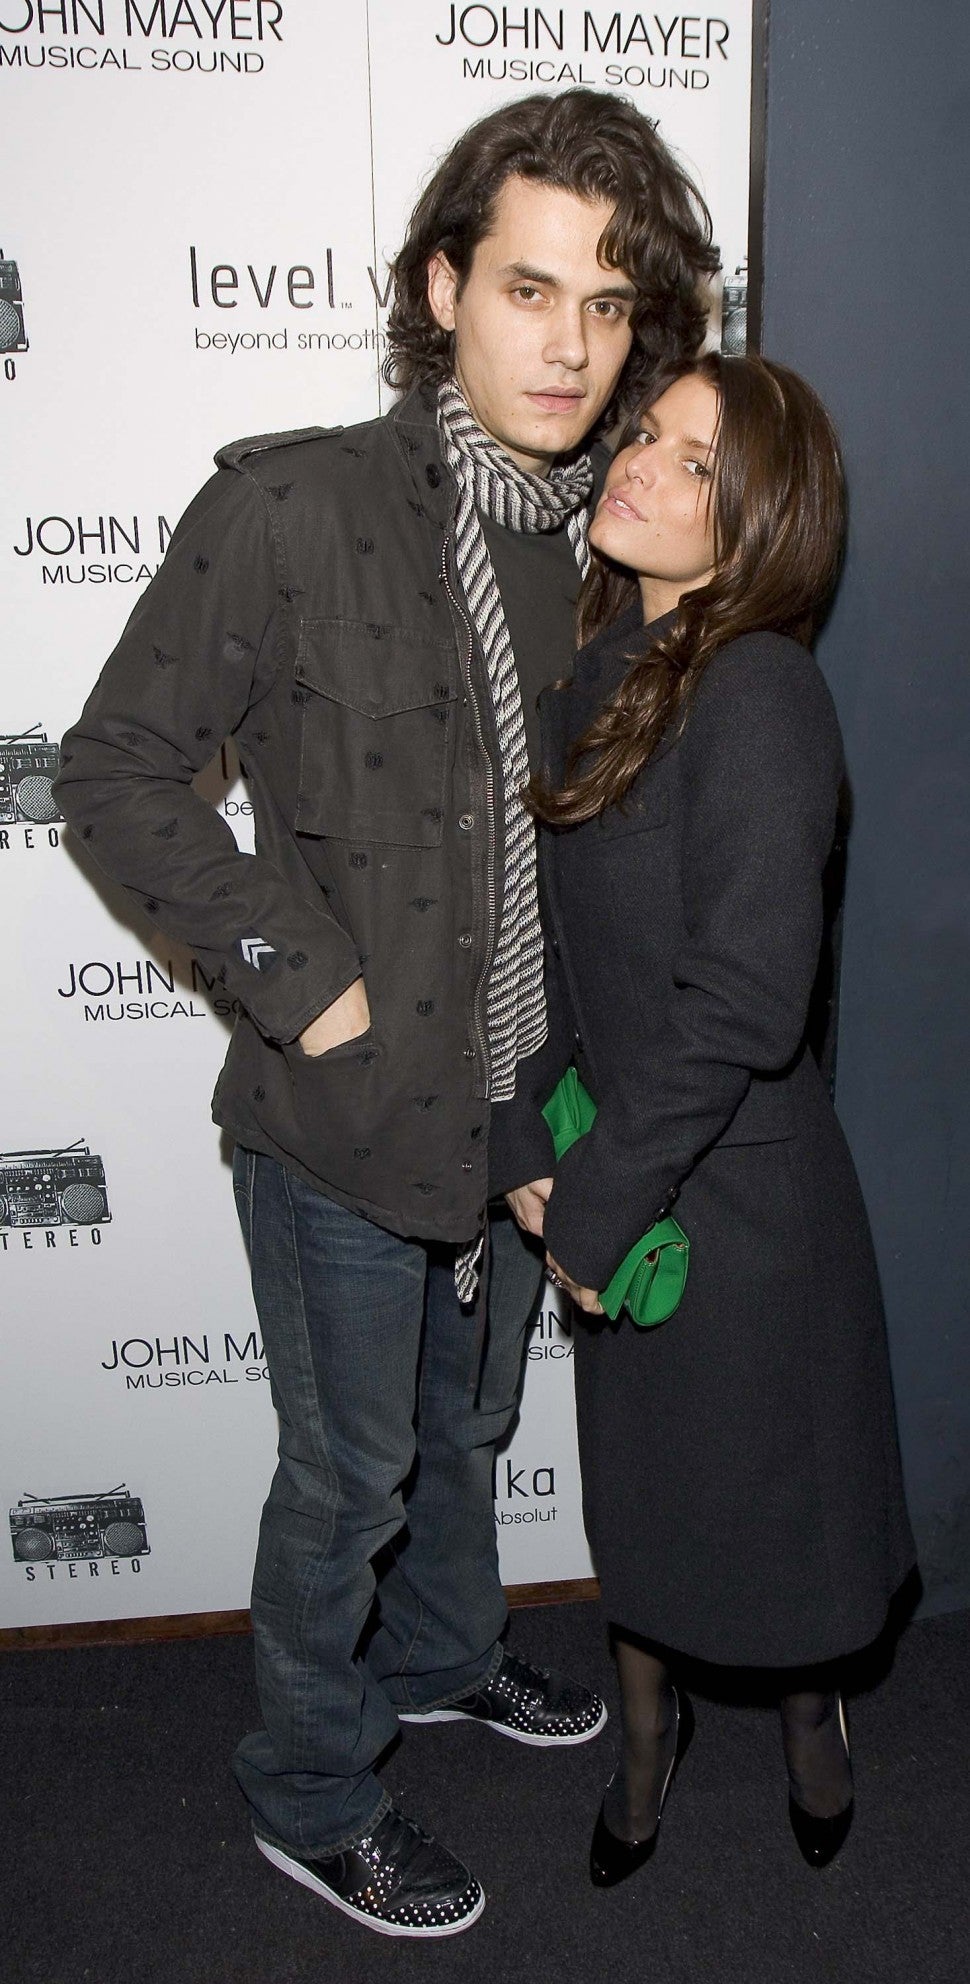 John Mayer and Jessica Simpson